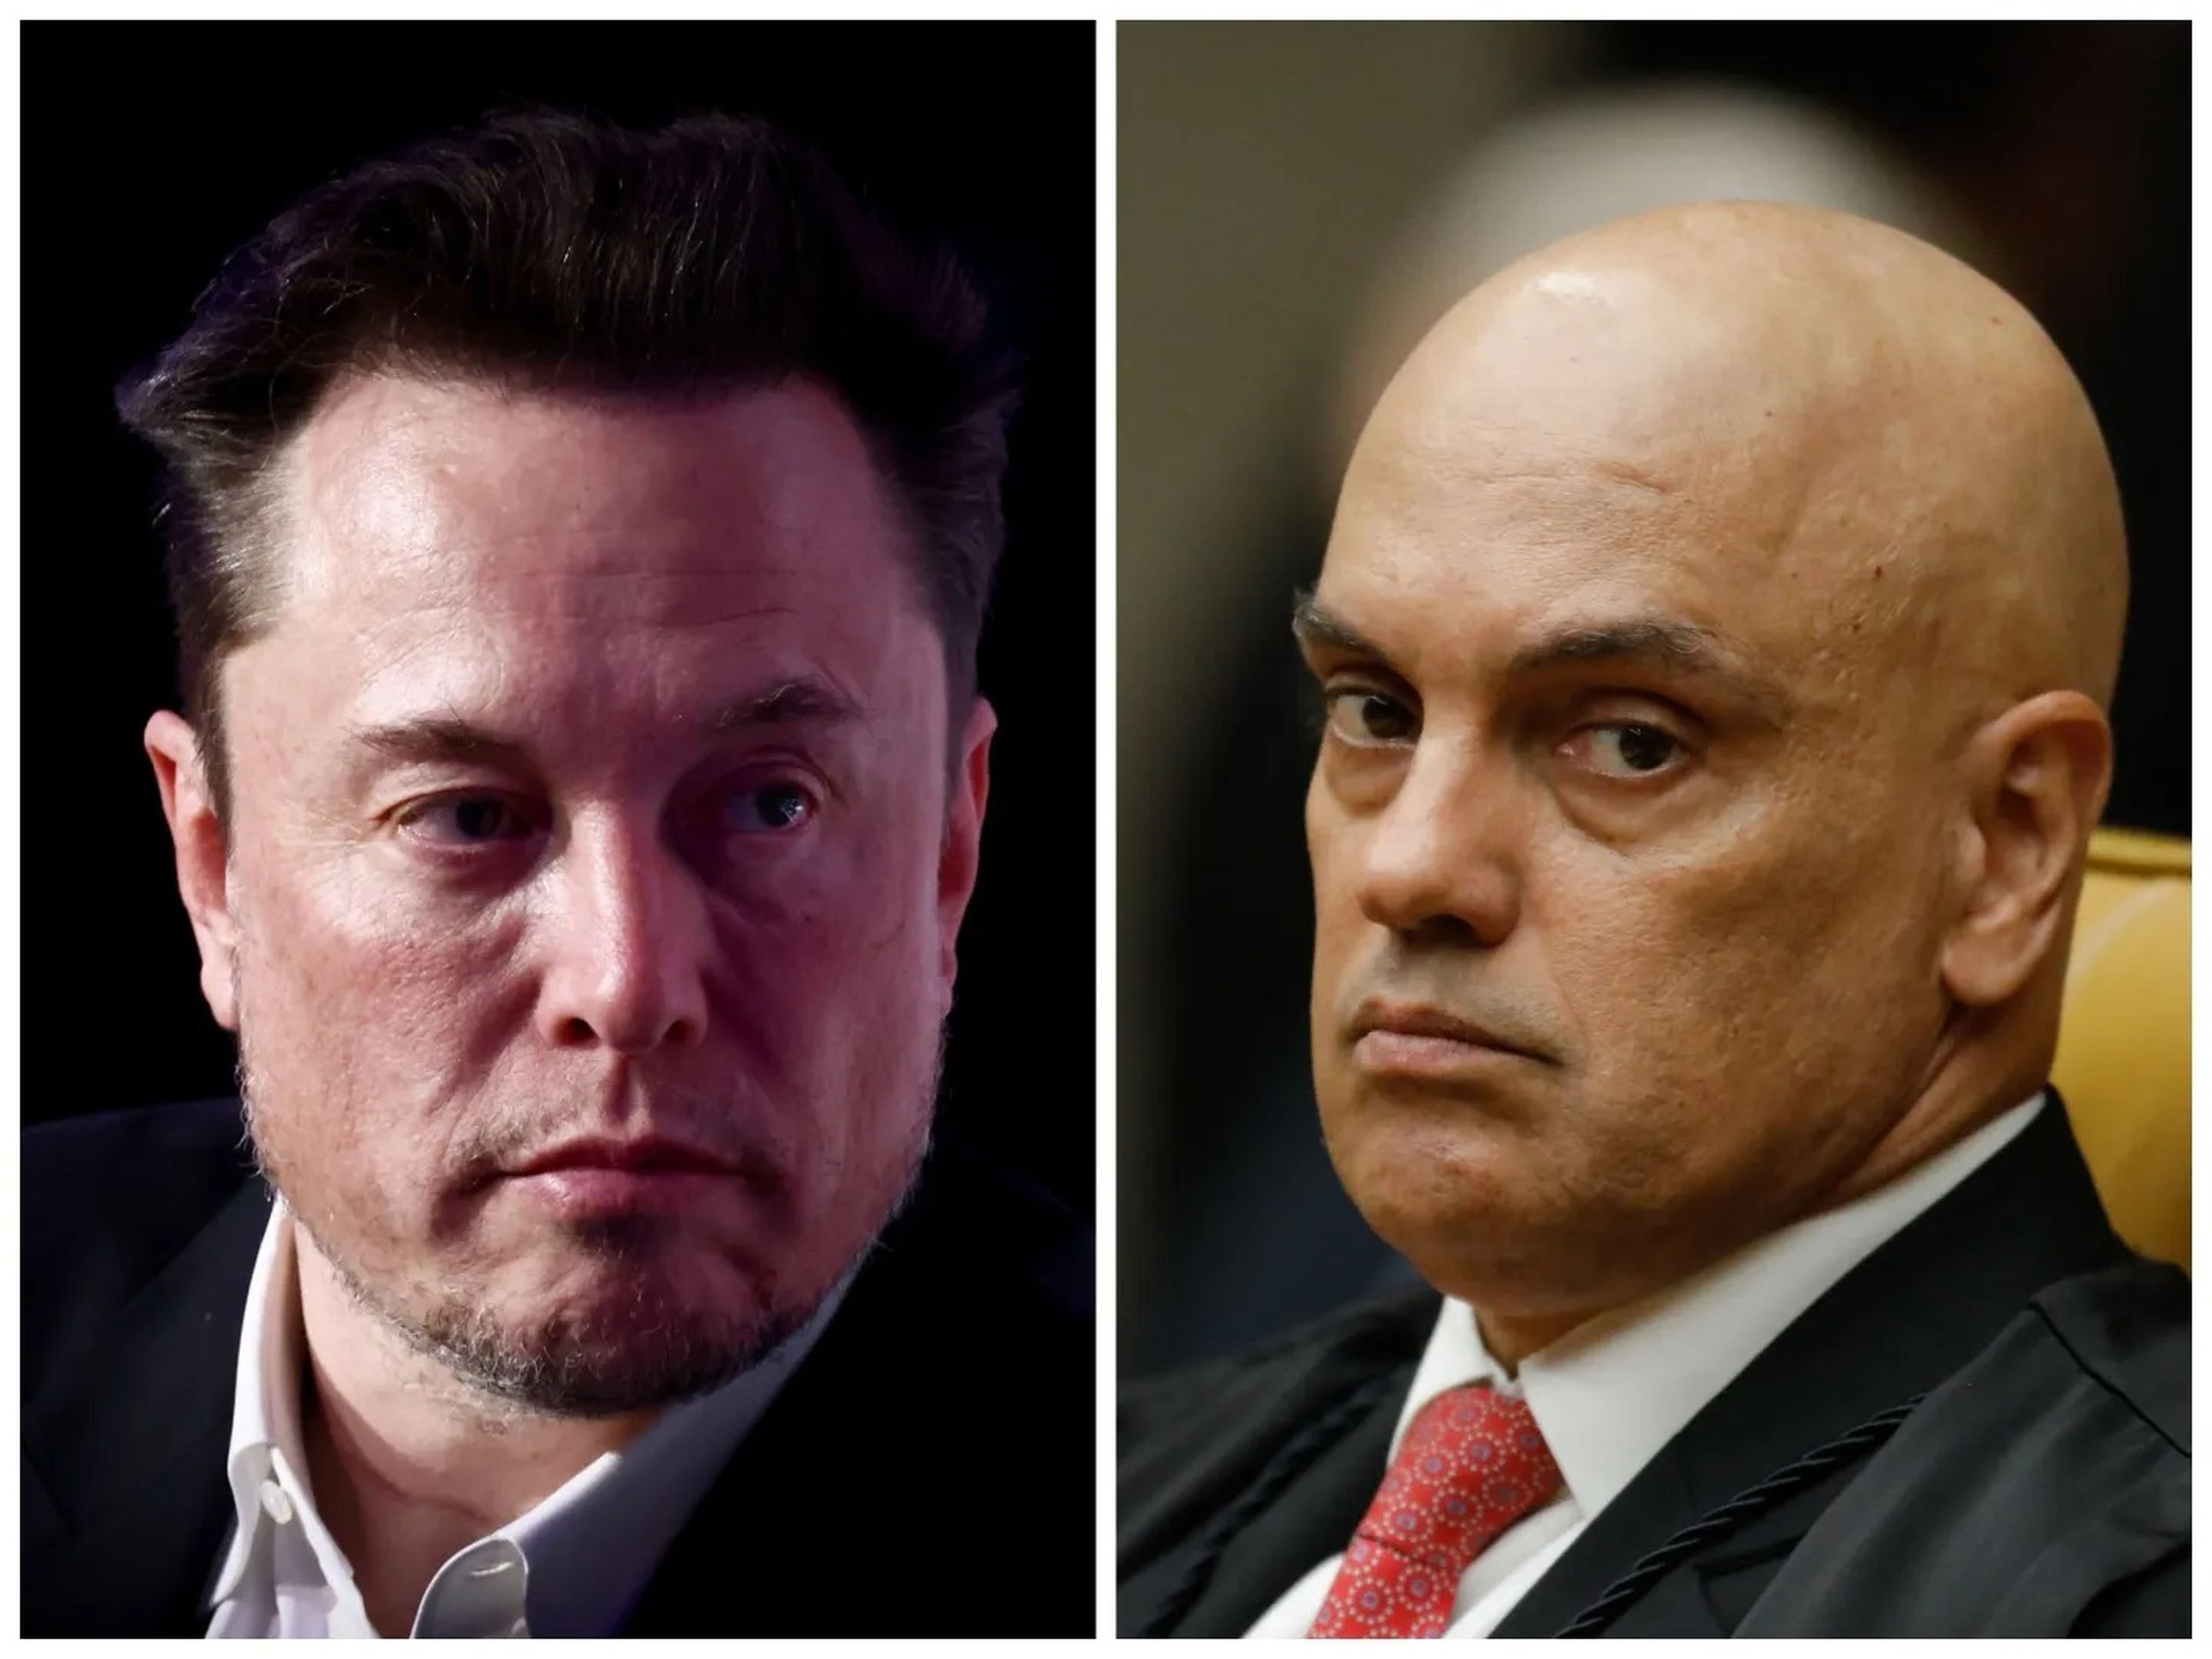 A composite image of Elon Musk and Justice Alexandre de Moraes.